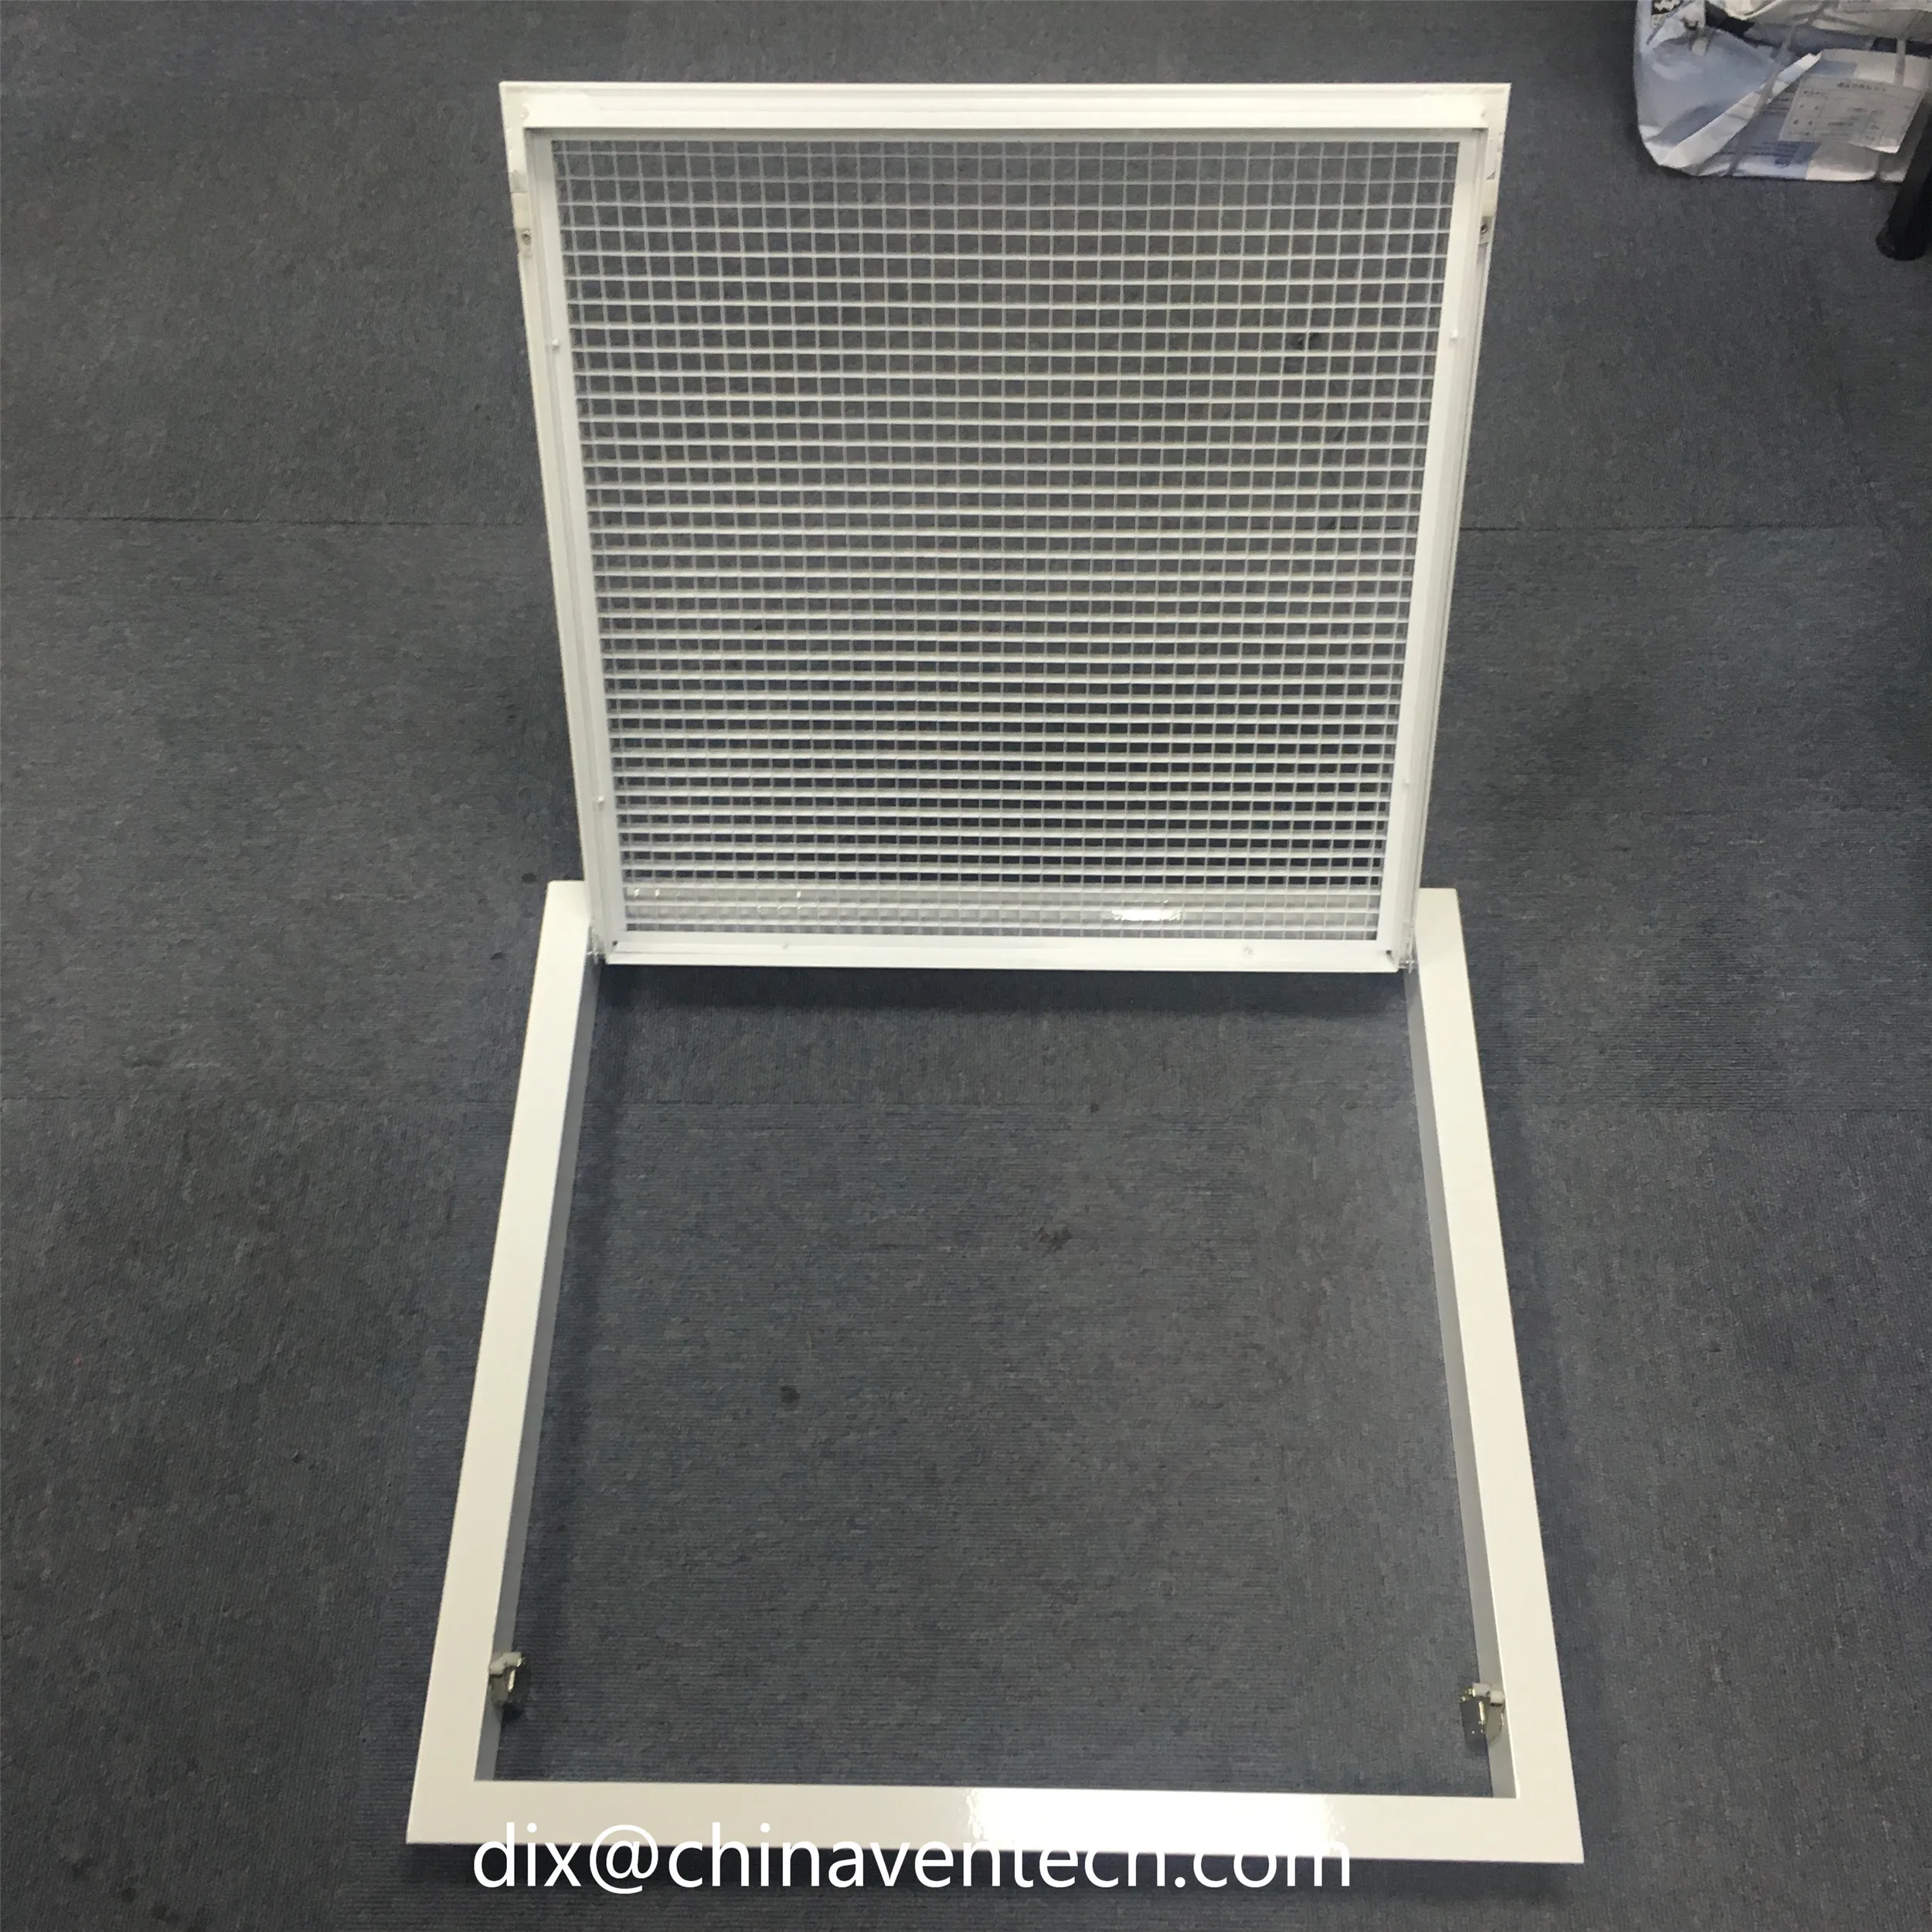 Hvac sidewall installed ventilation return air egg crate grille